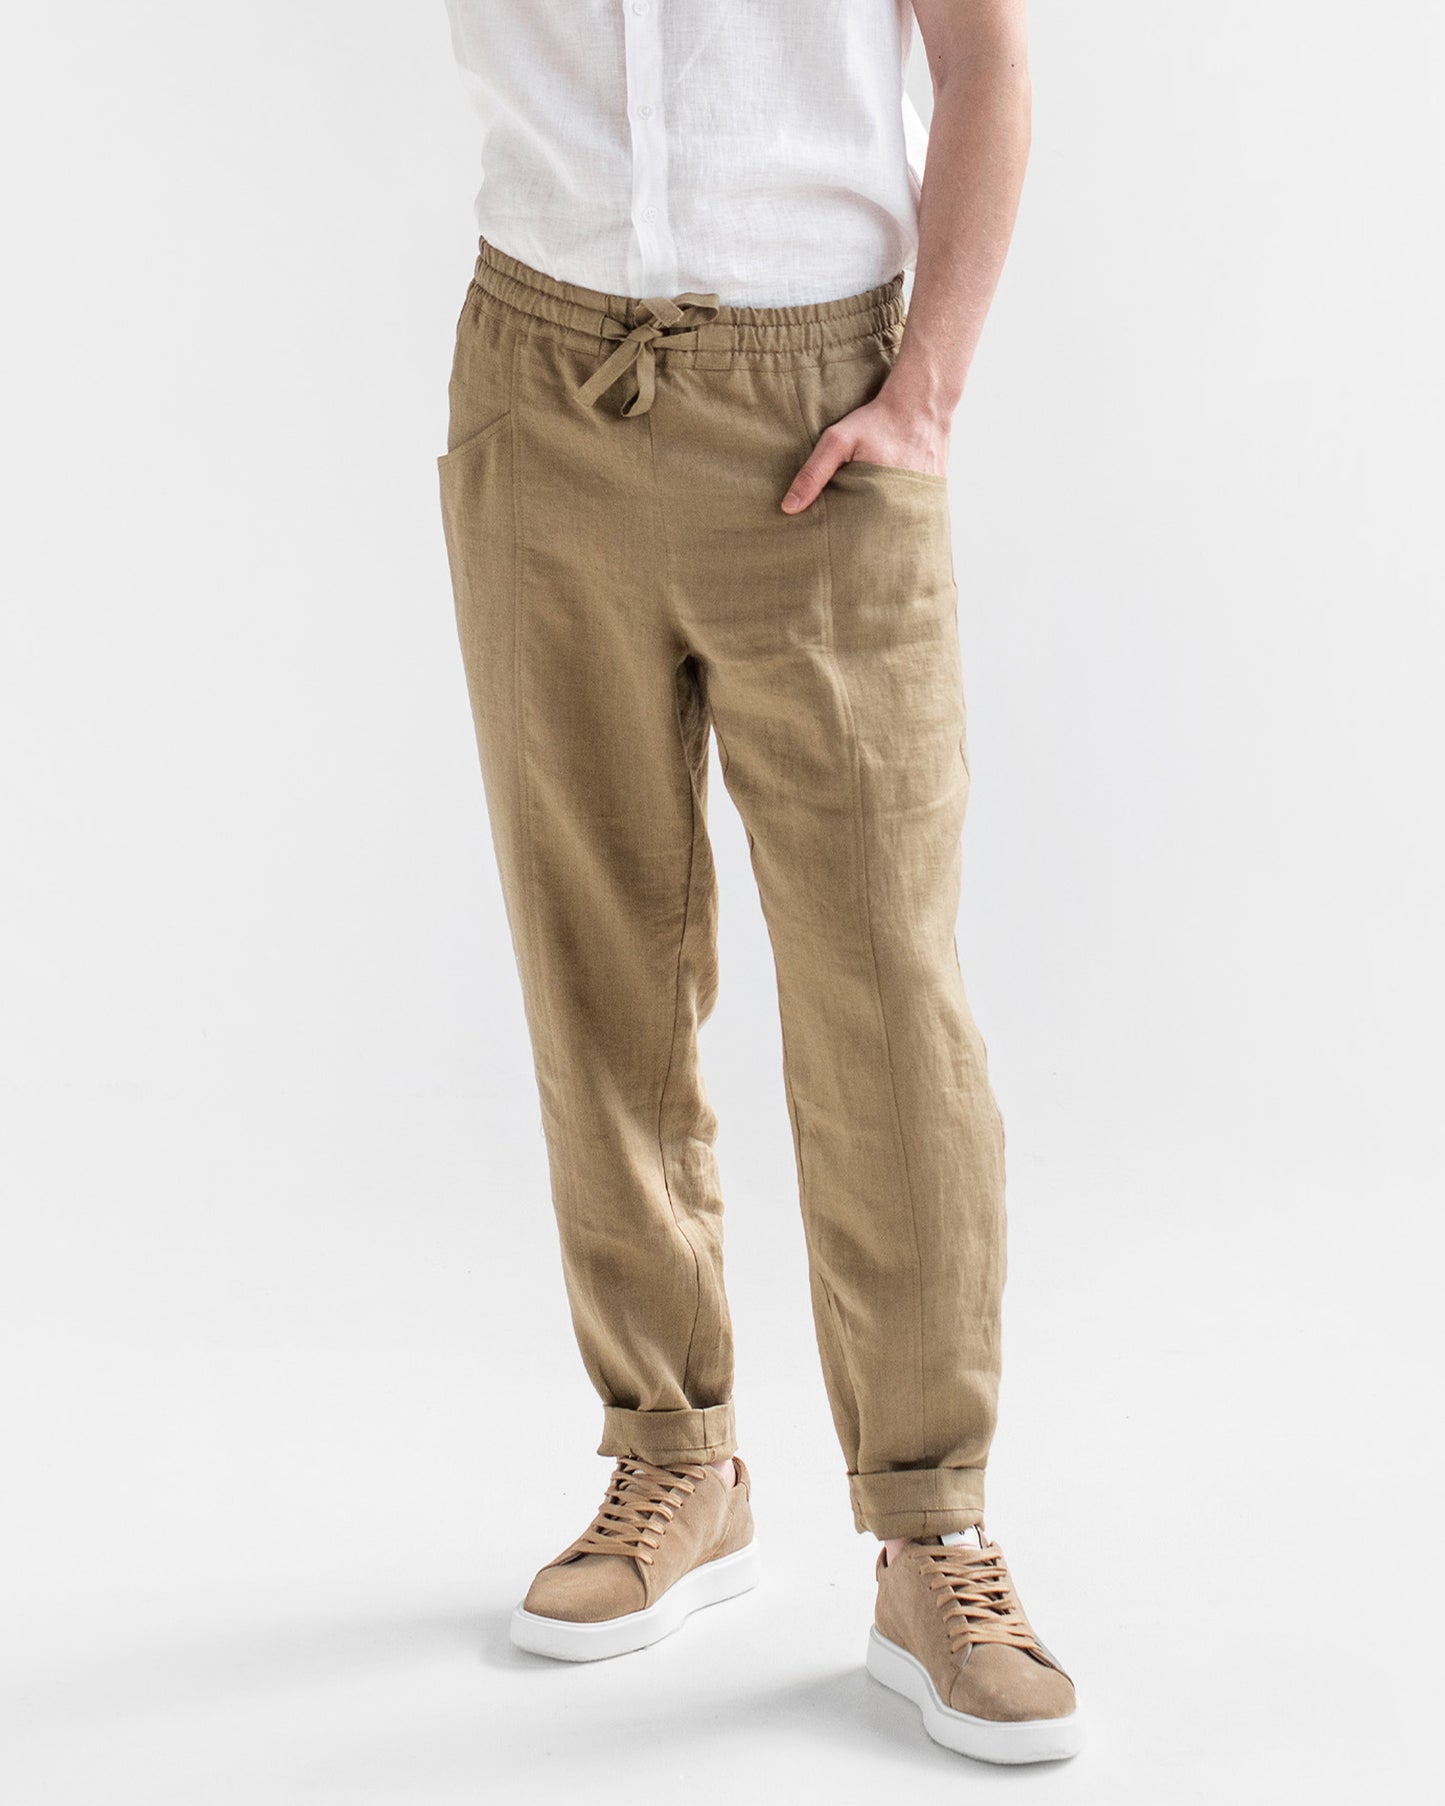 Men's linen pants TRUCKEE in Dried moss - MagicLinen